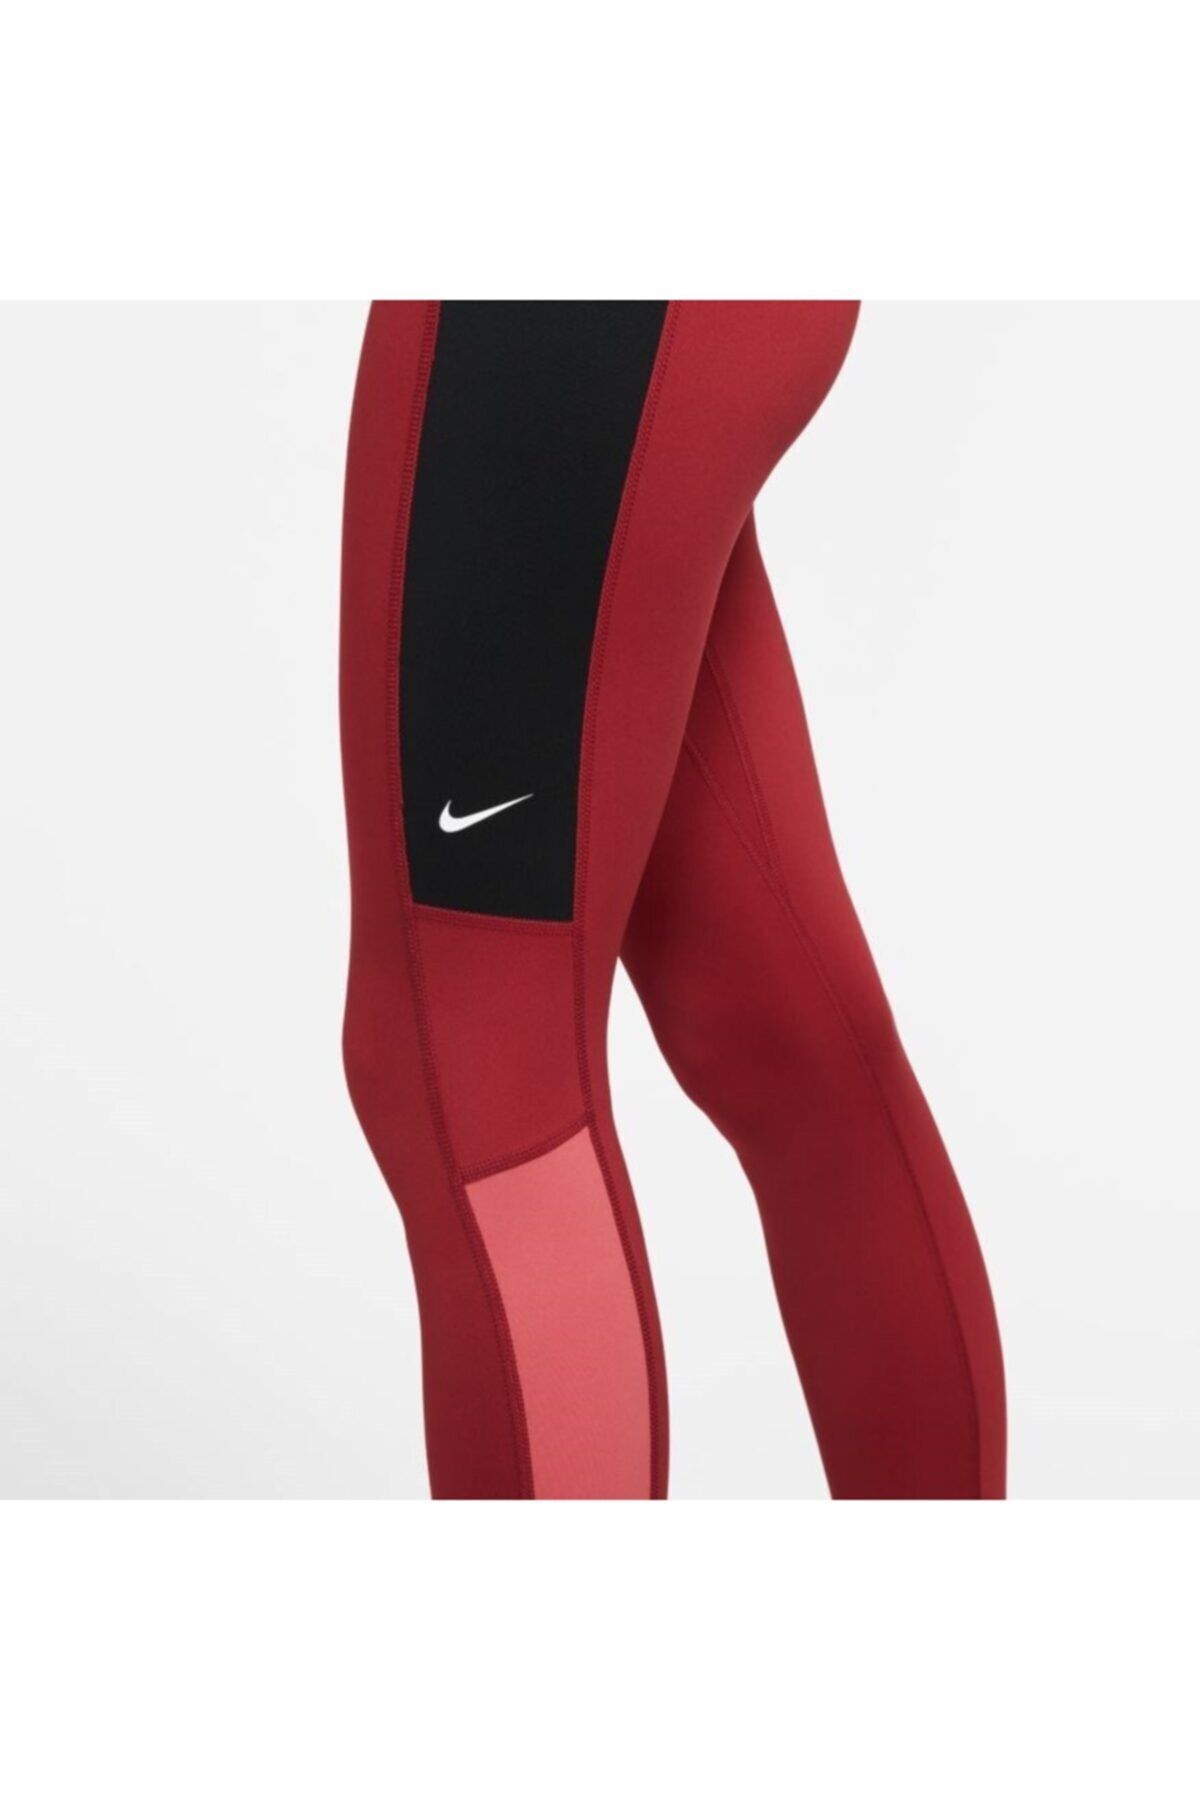 Nike One Women’s Colourblock 7/8 Leggings Small Tight Fit Mid Rise.  DN4677-010 